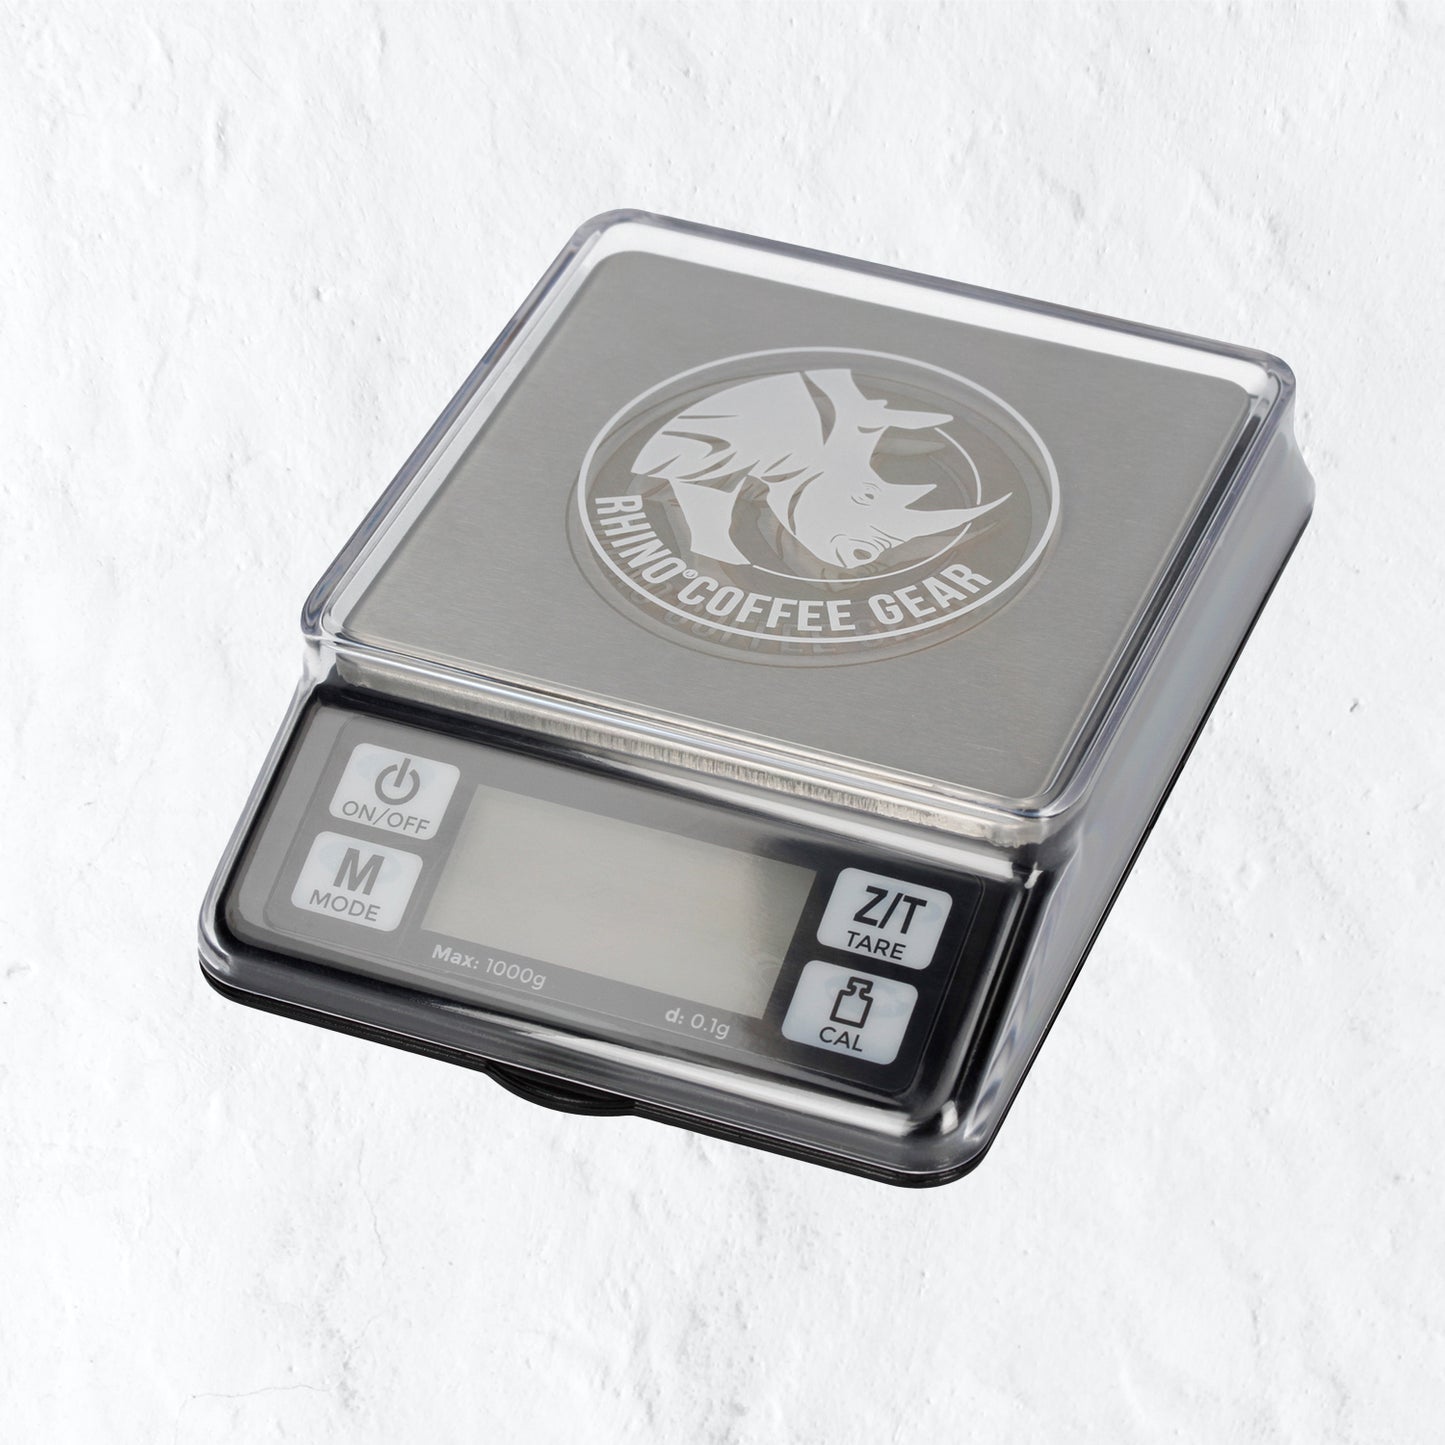 Rhino Dose scale 1kg/0.1g